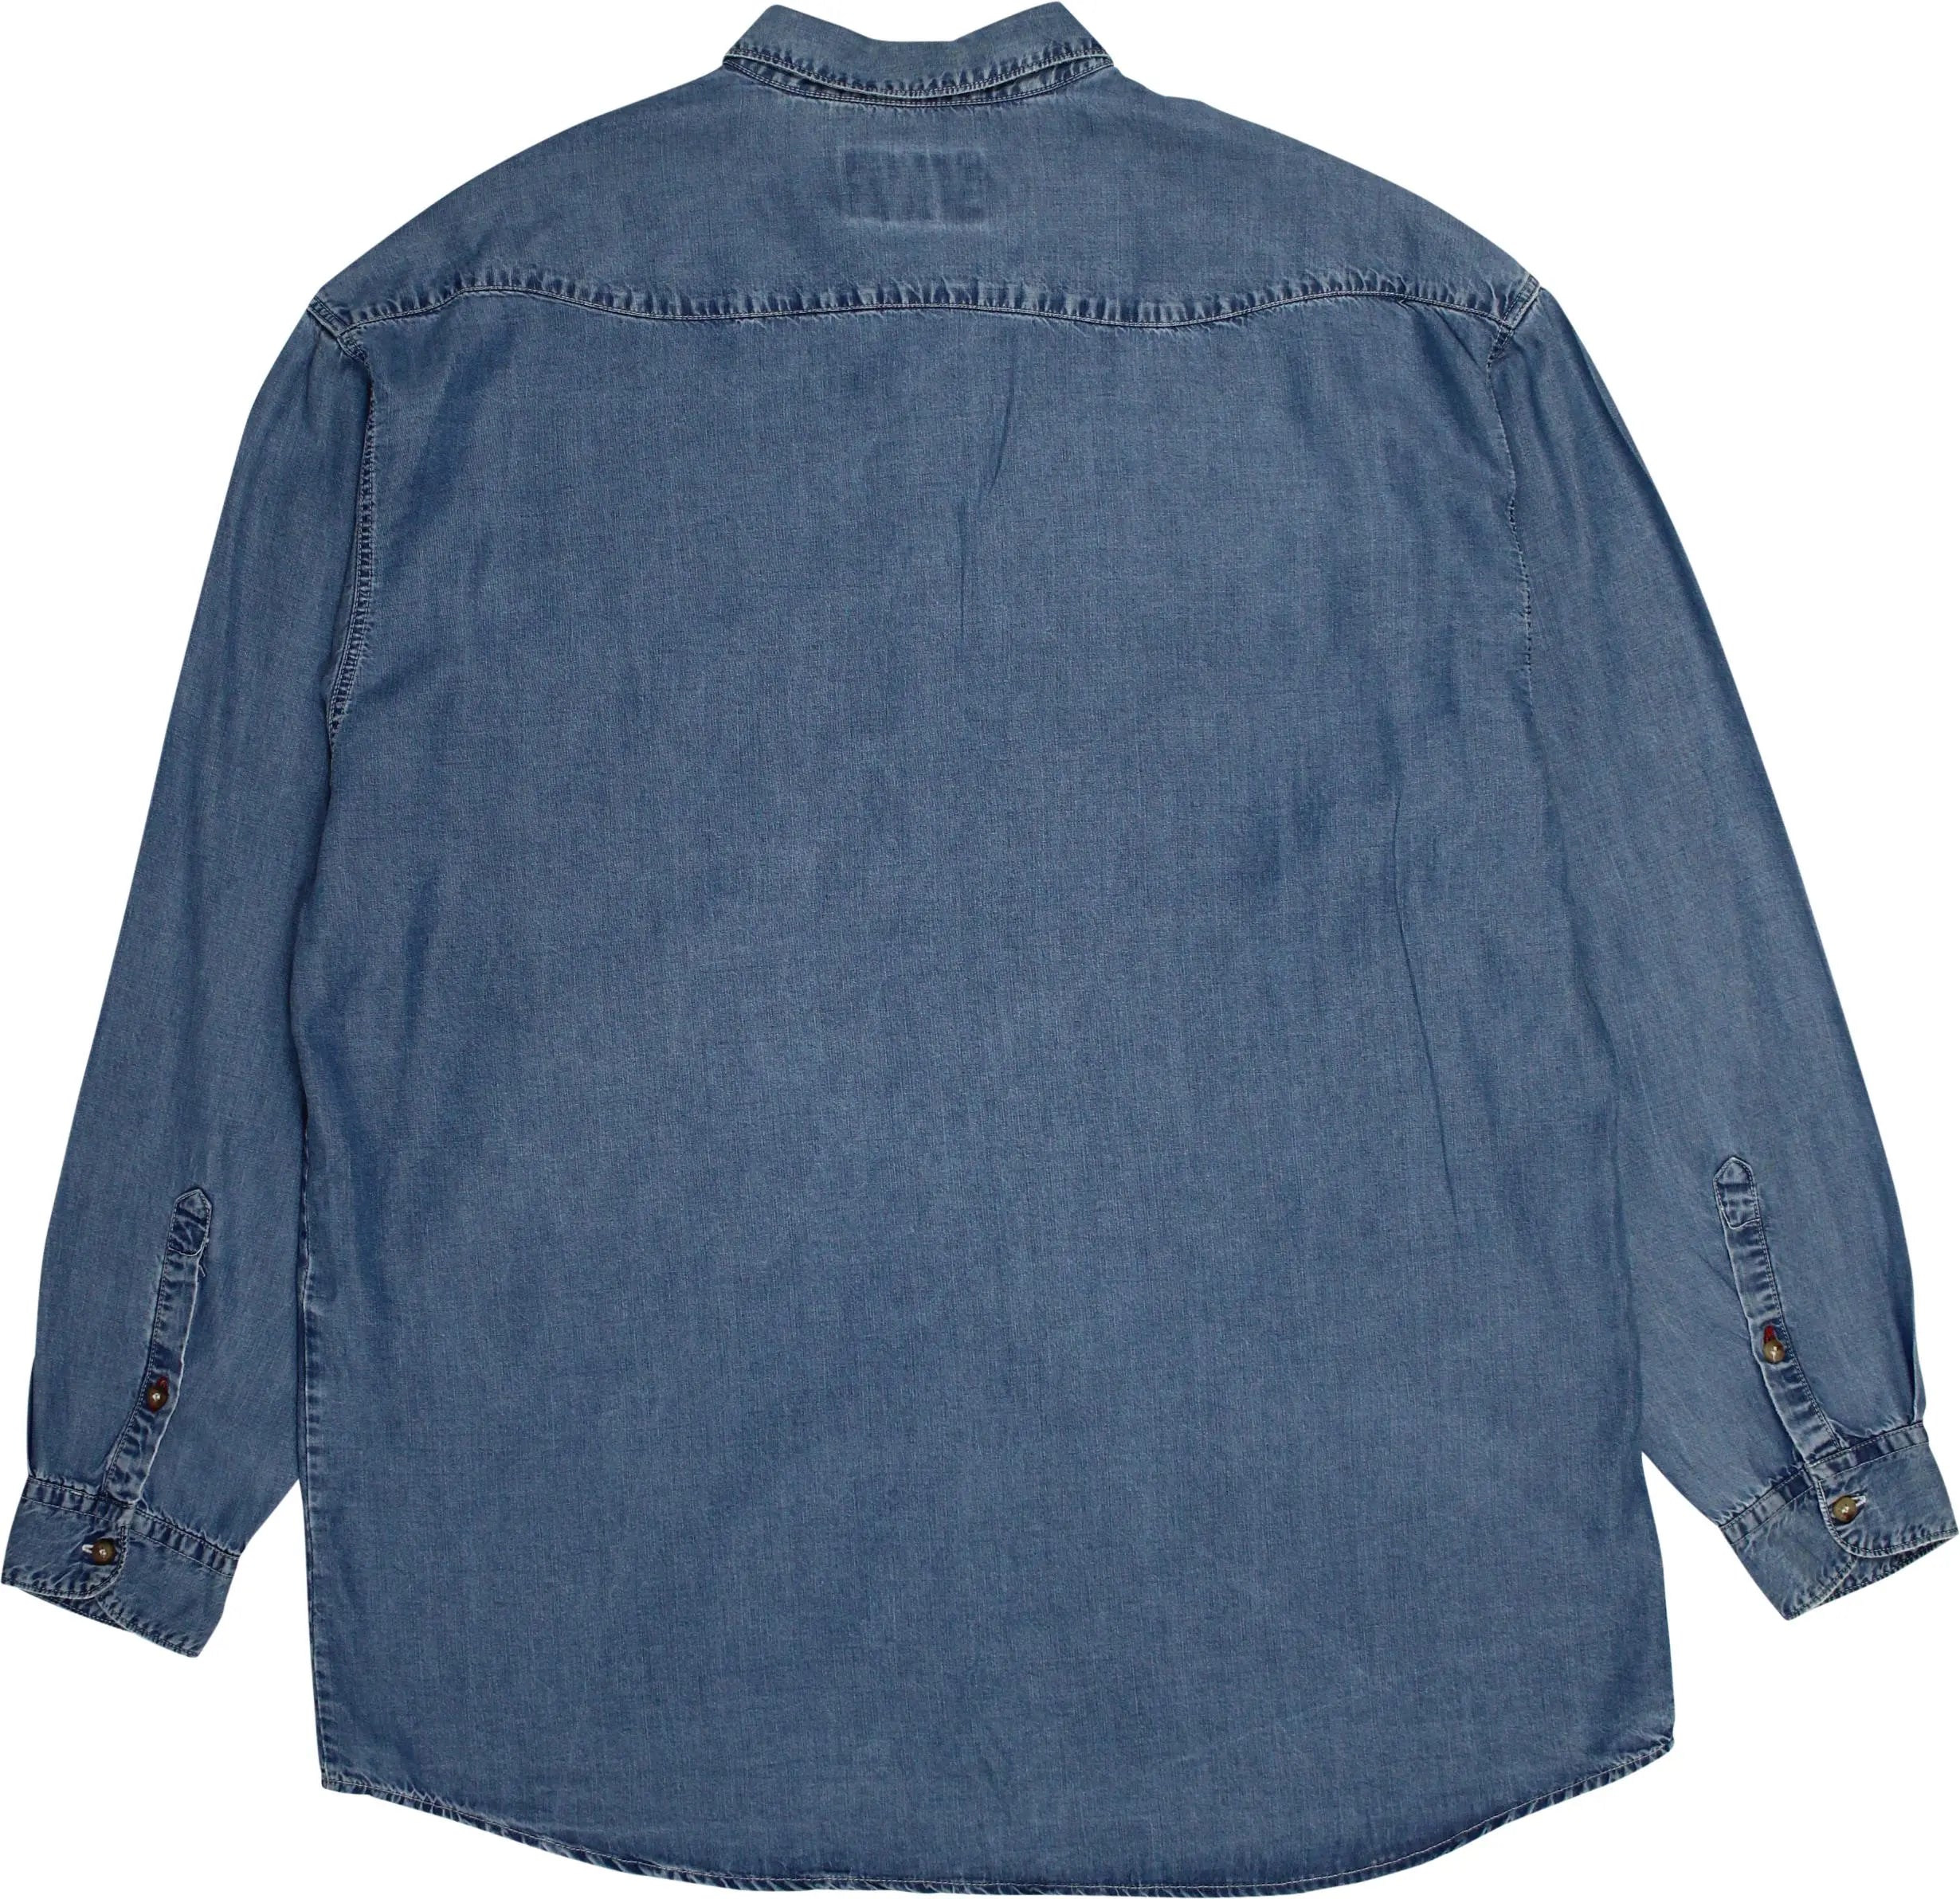 Joop! - Denim Shirt by Joop!- ThriftTale.com - Vintage and second handclothing